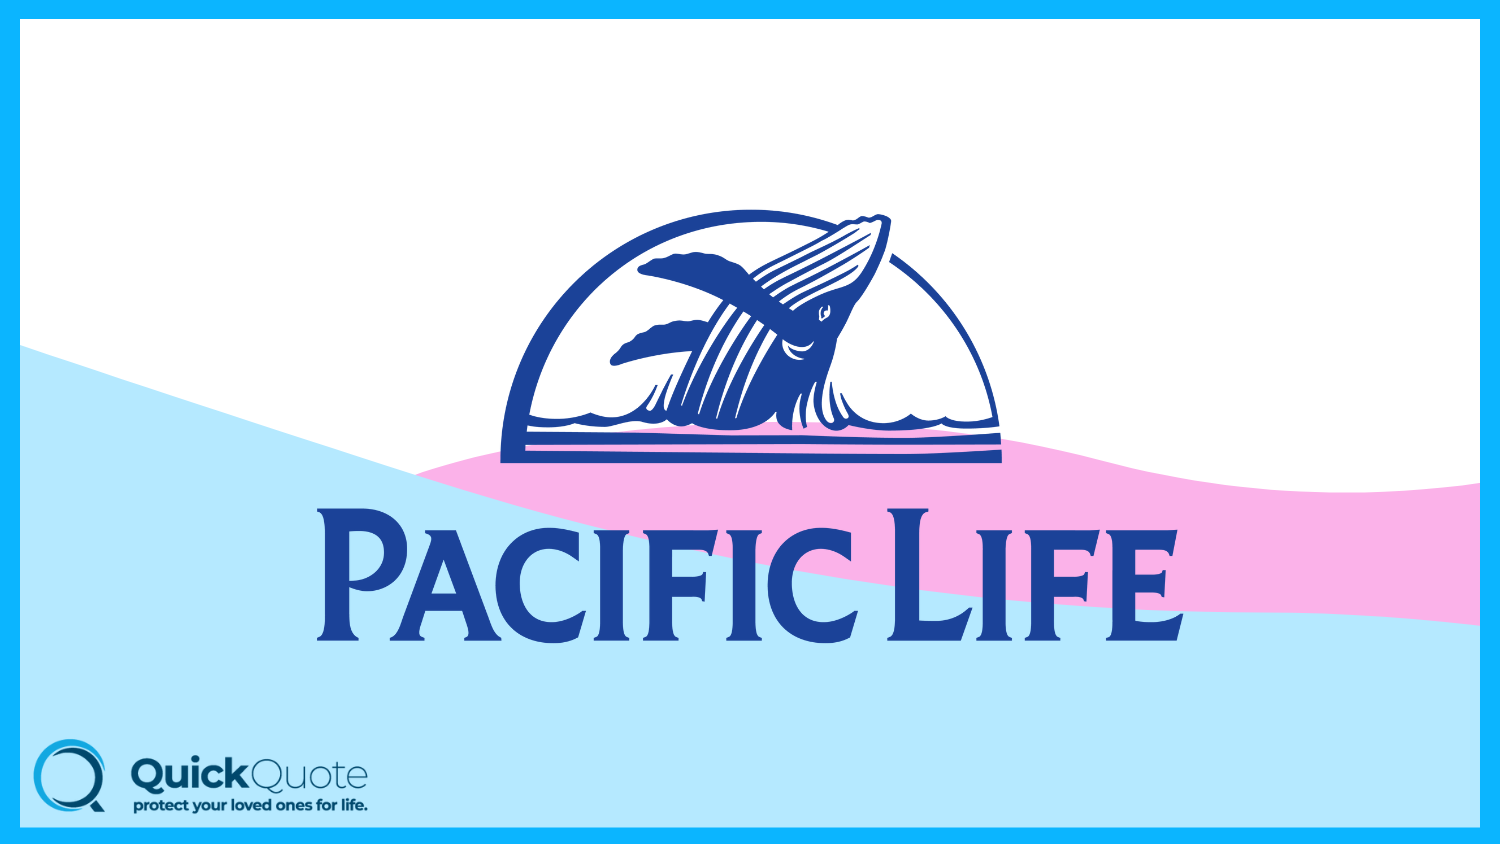 Pacific Life: Best Life Insurance for Marijuana Users